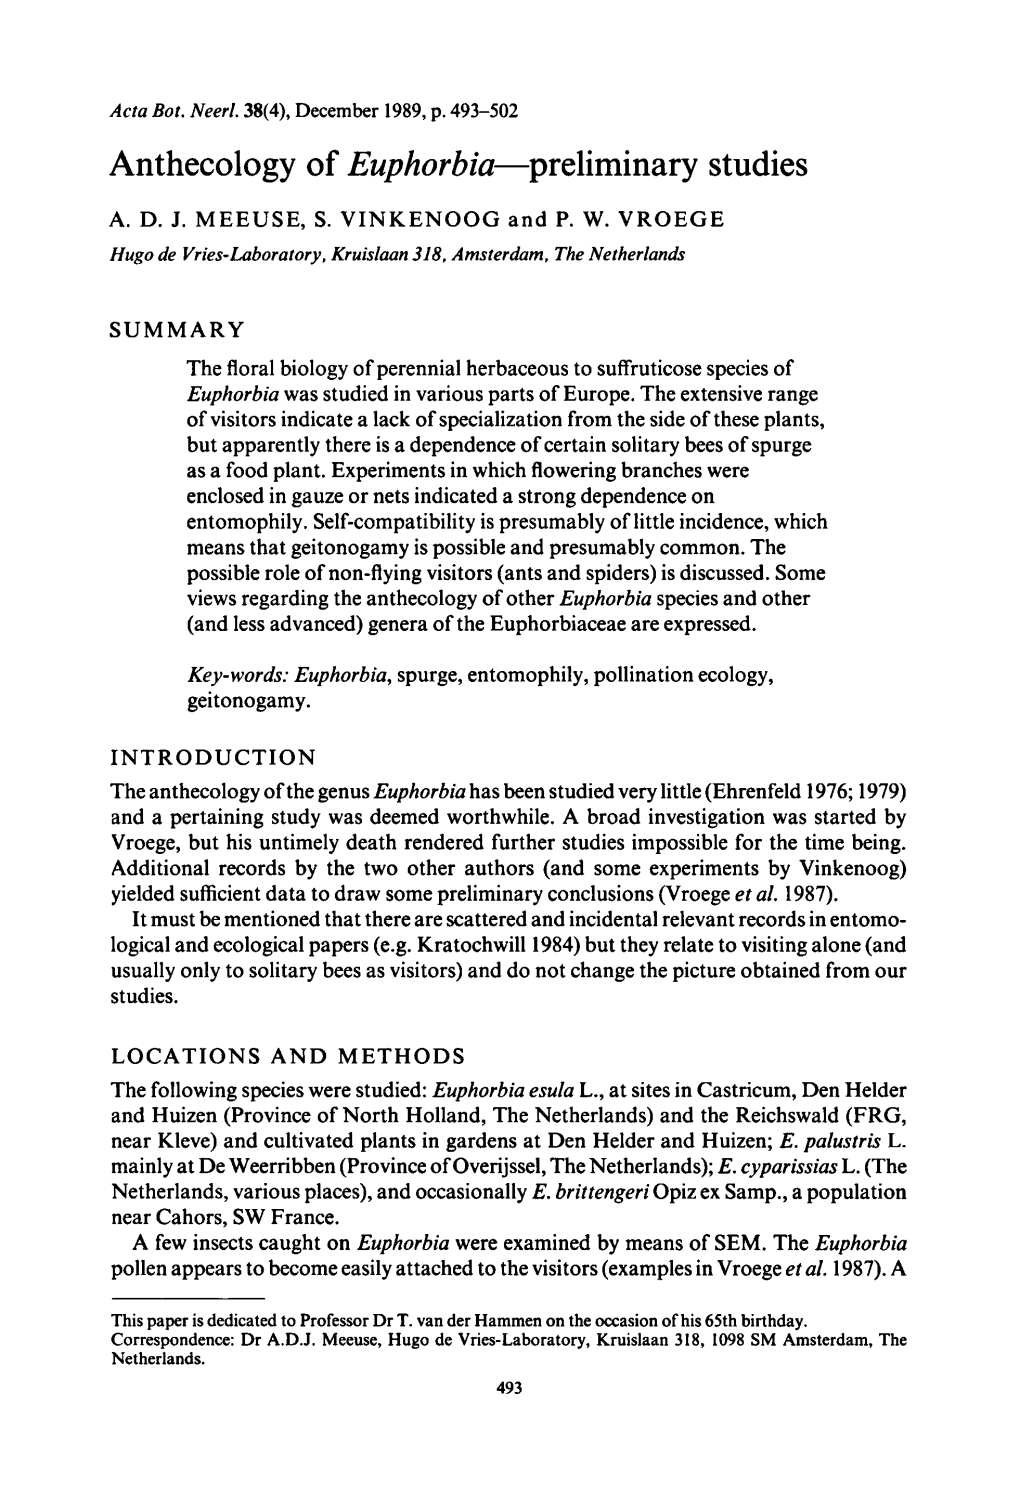 Anthecology of Euphorbia—Preliminary Studies